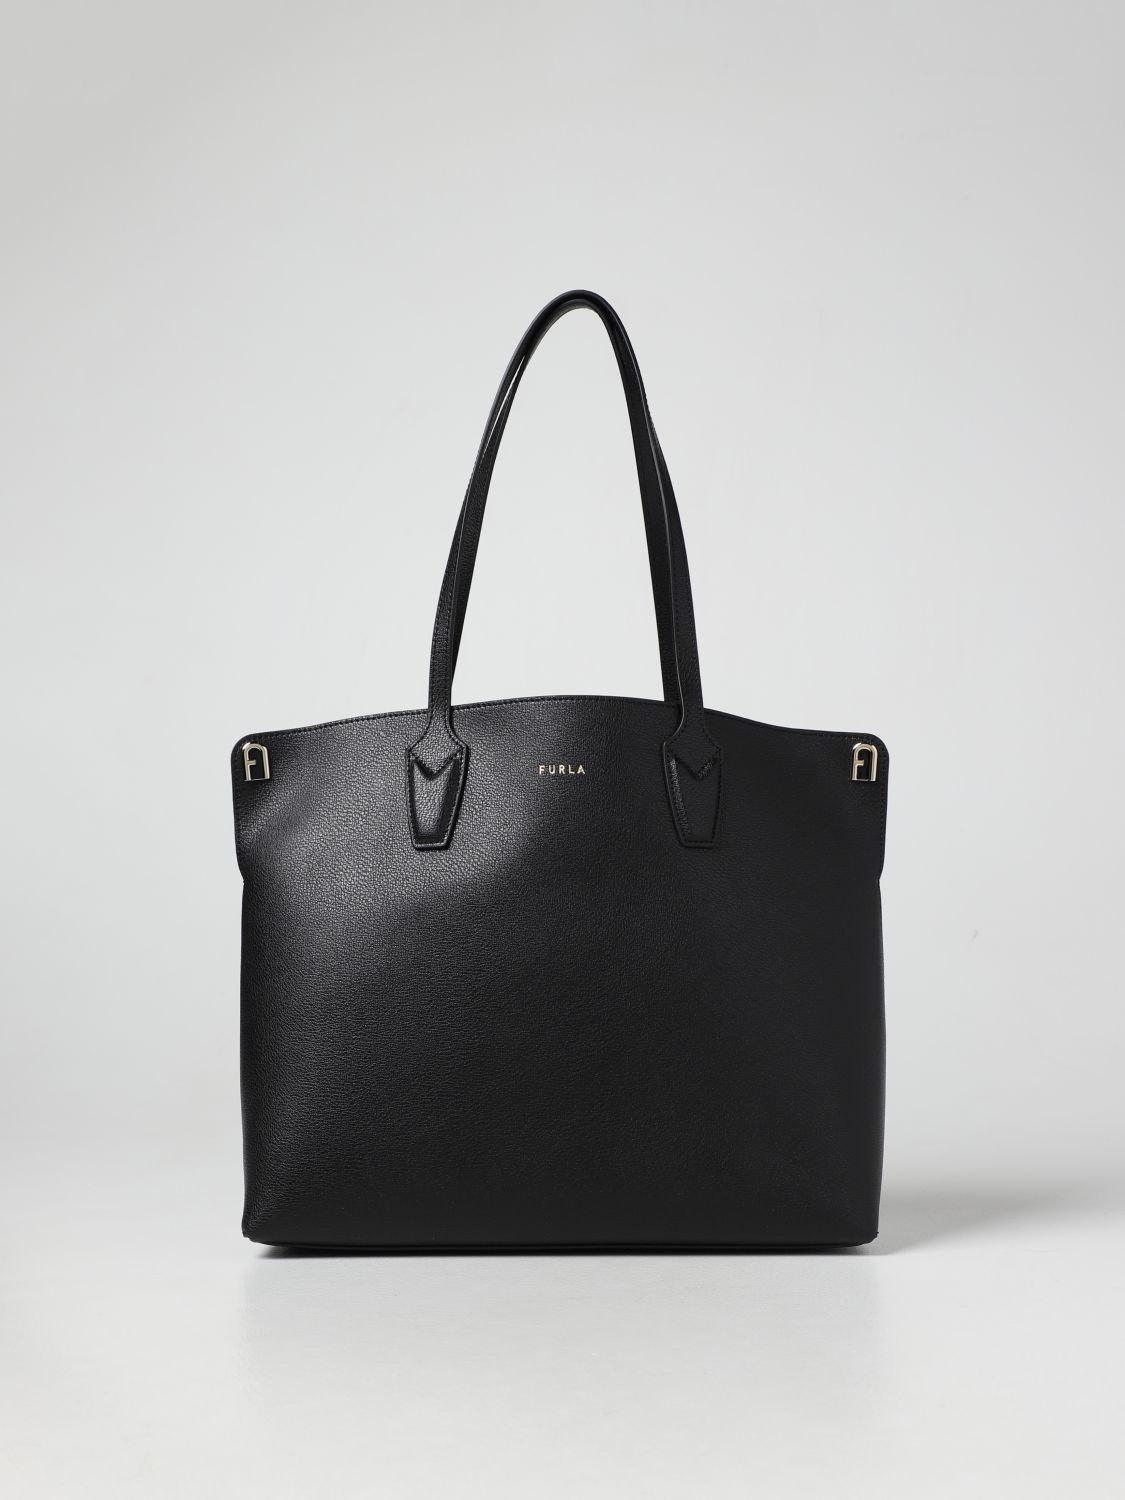 FURLA: Paradiso tote bag in grained leather - Black | Furla tote bags ...